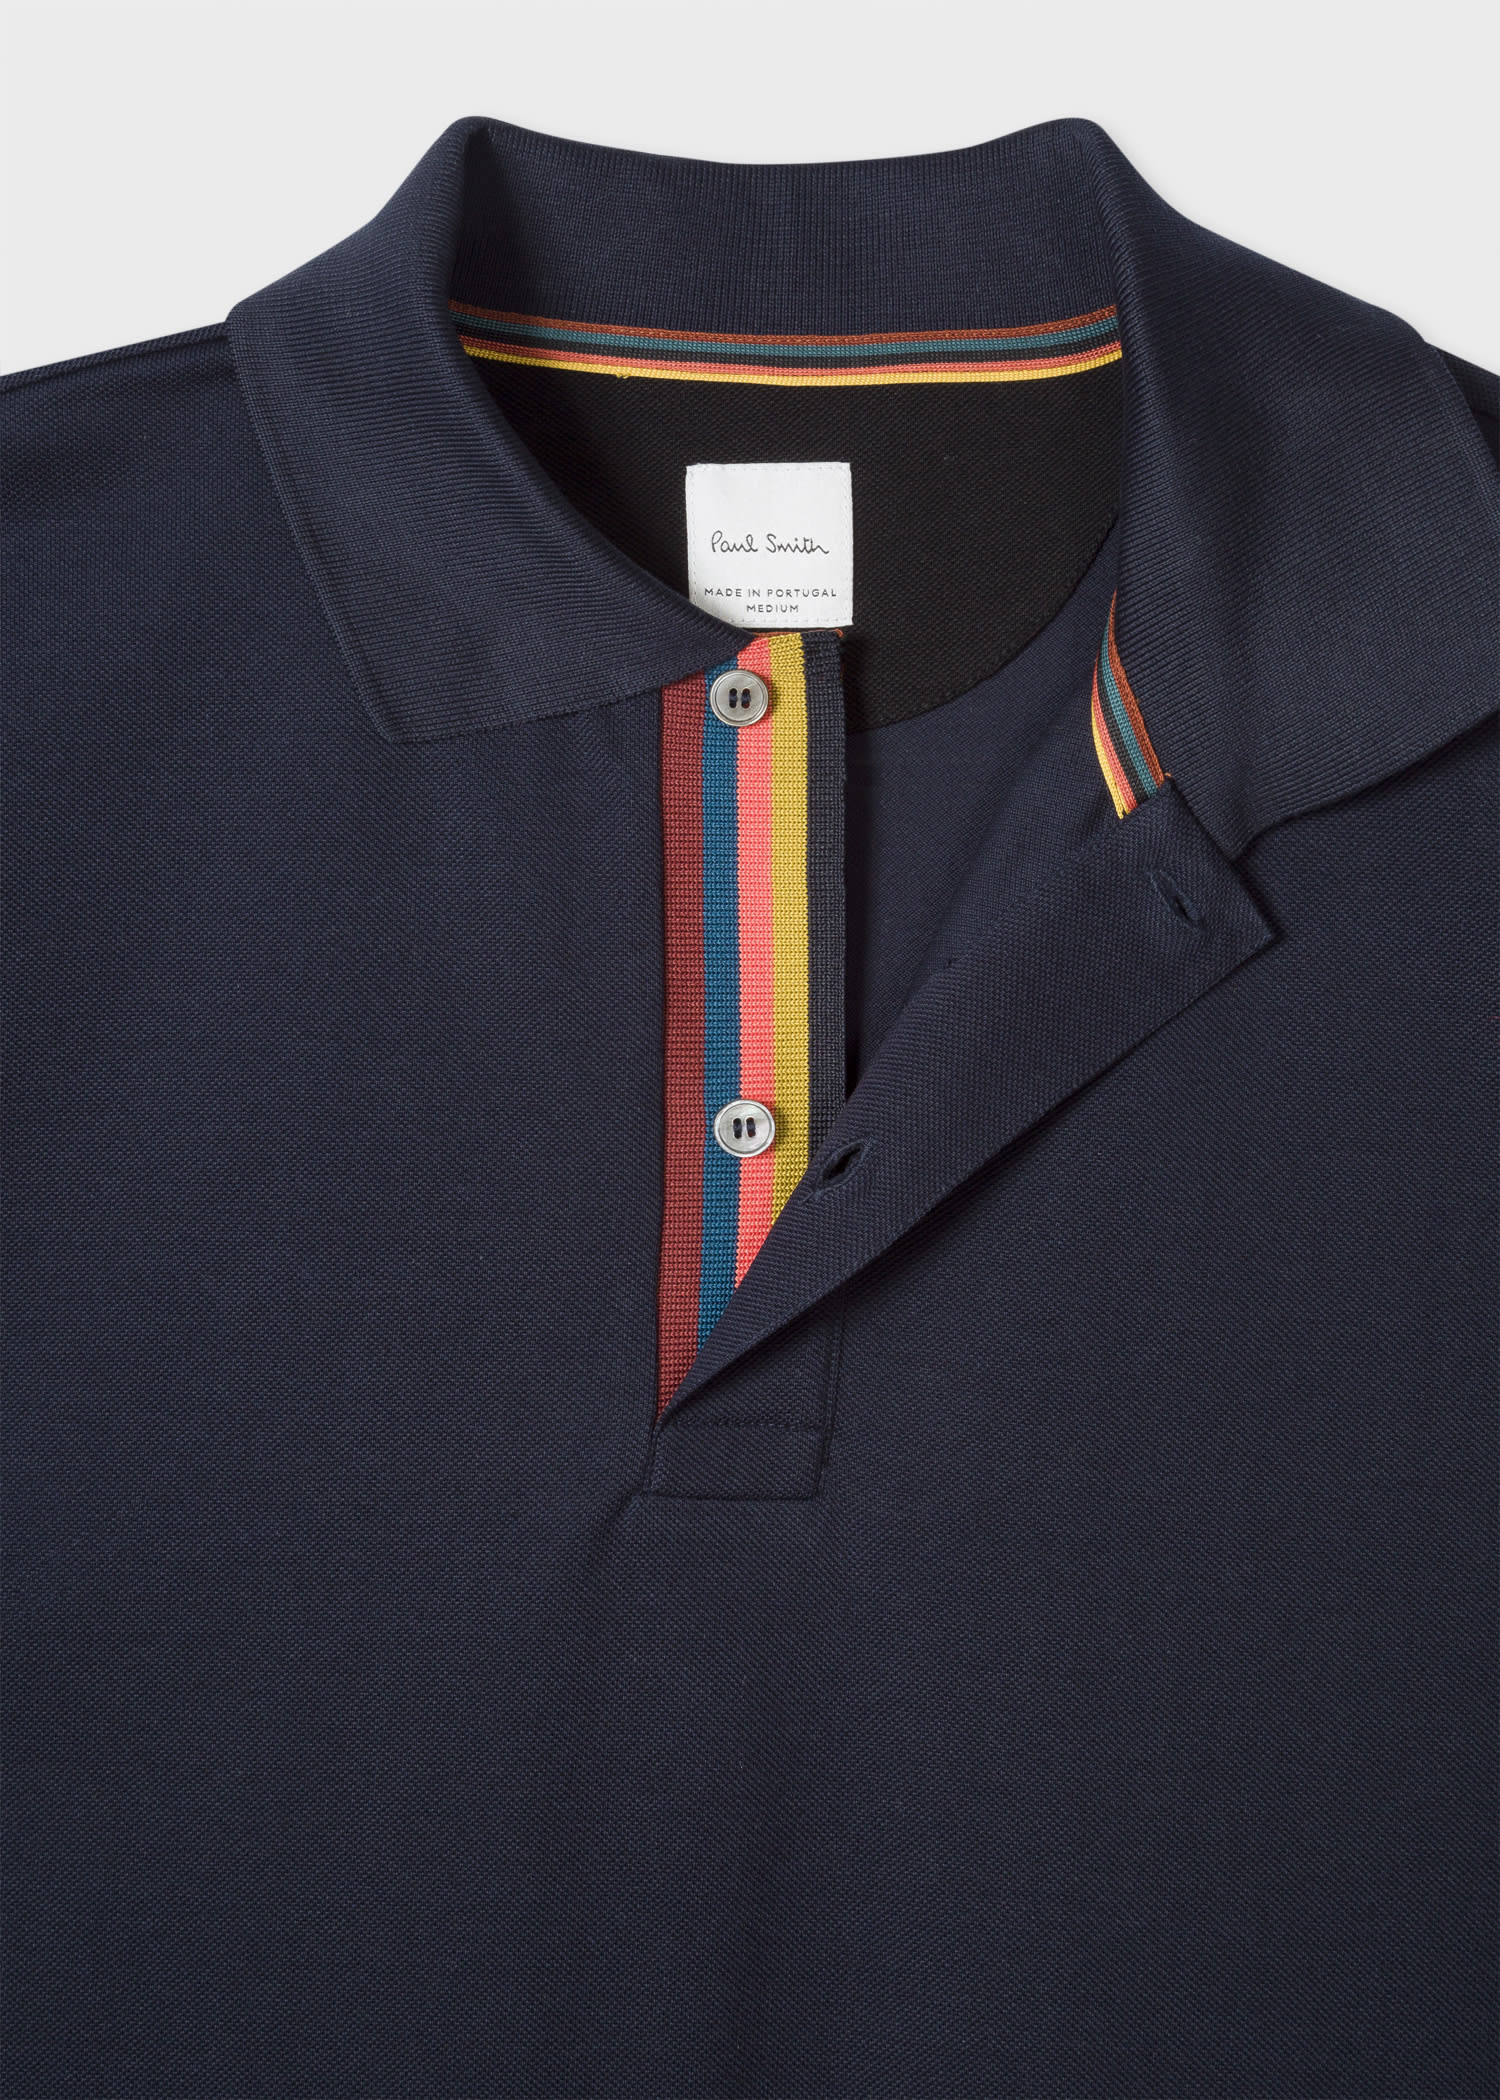 Men's Slim-Fit Dark Navy Cotton-Piqué Polo Shirt With 'Artis - Paul Smith